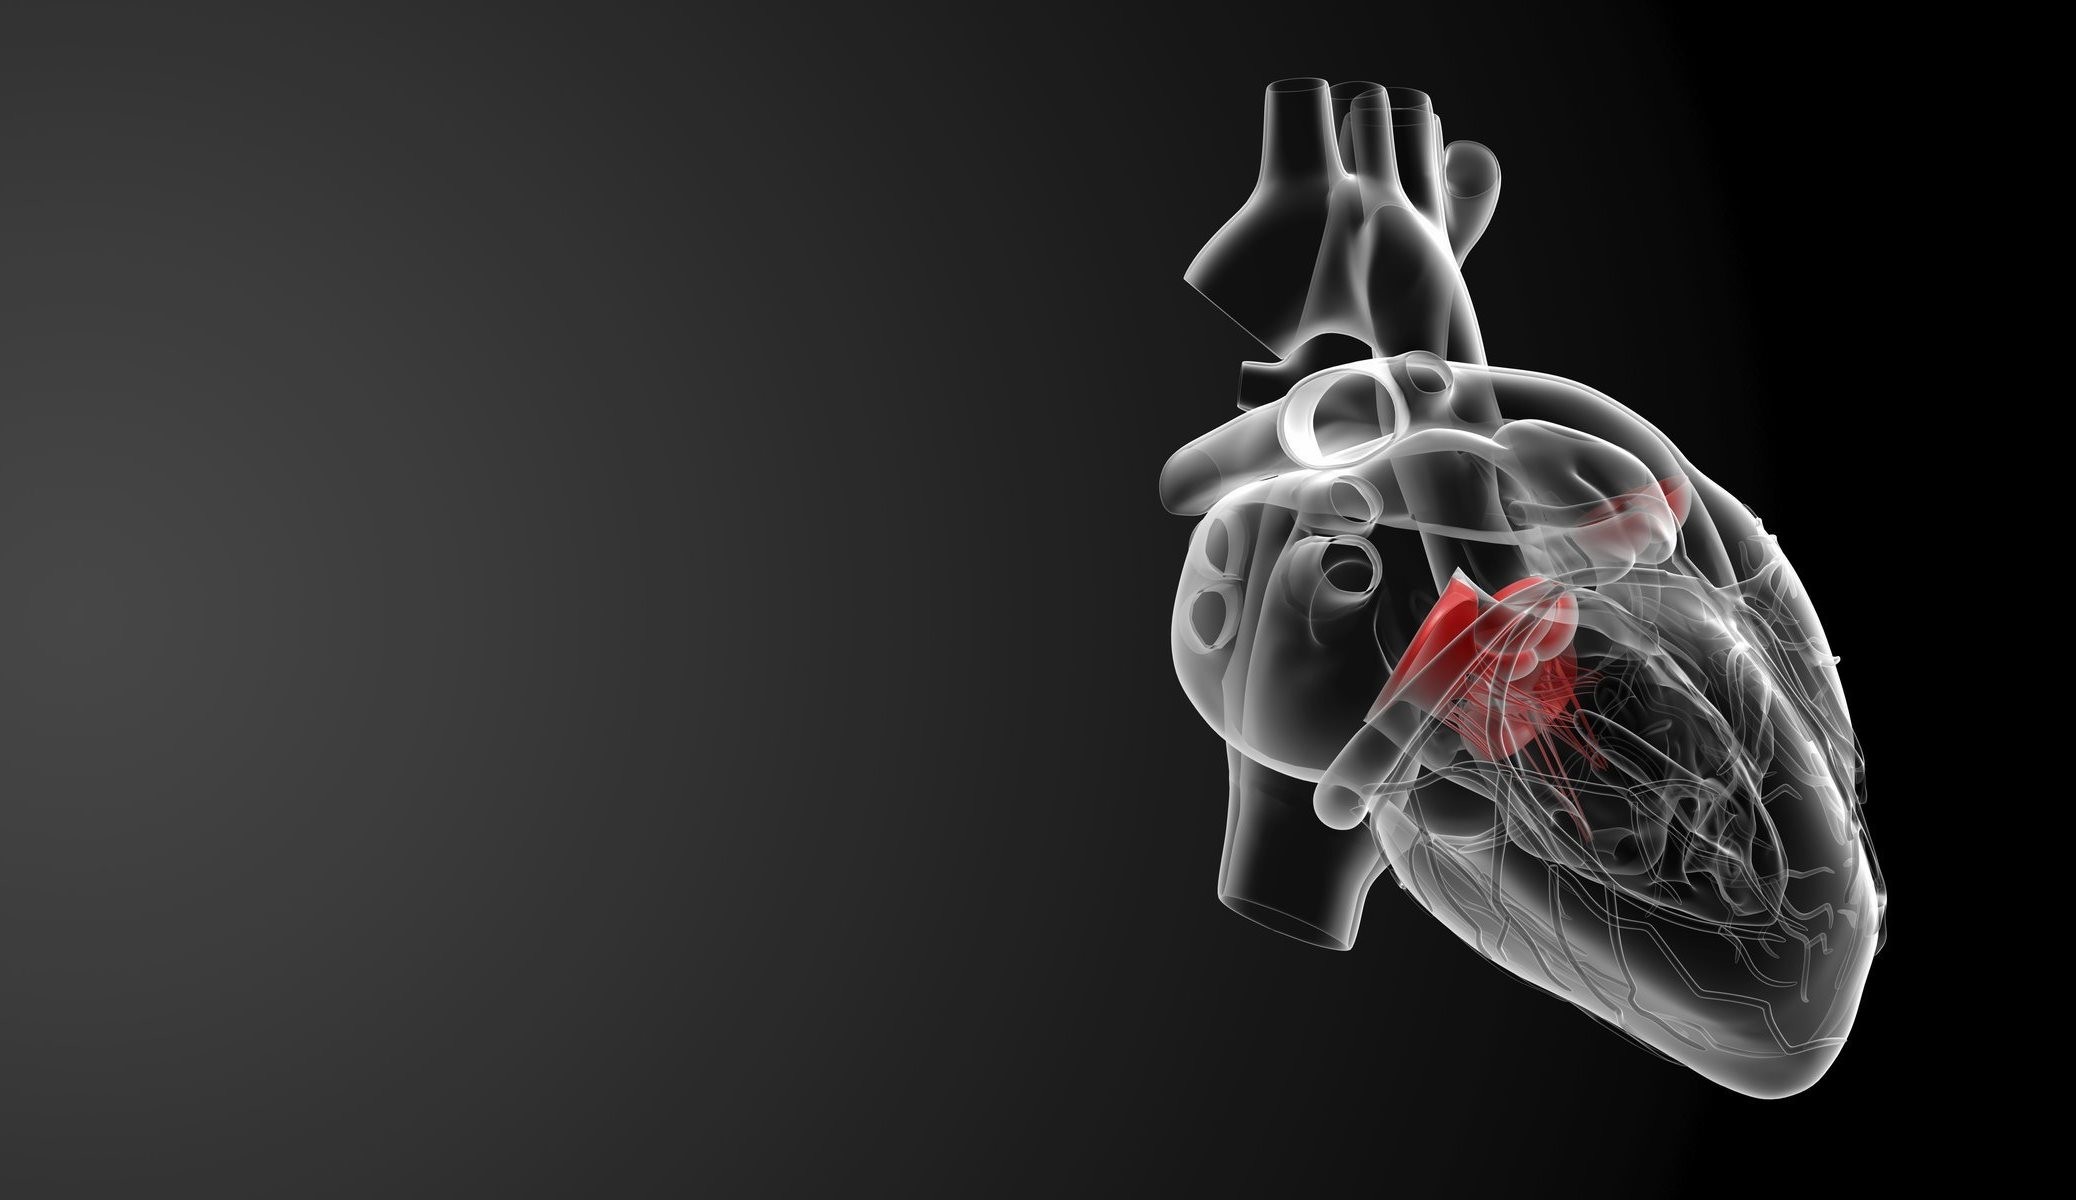 fond d'écran médical hd,corps humain,main,radiographie,cœur